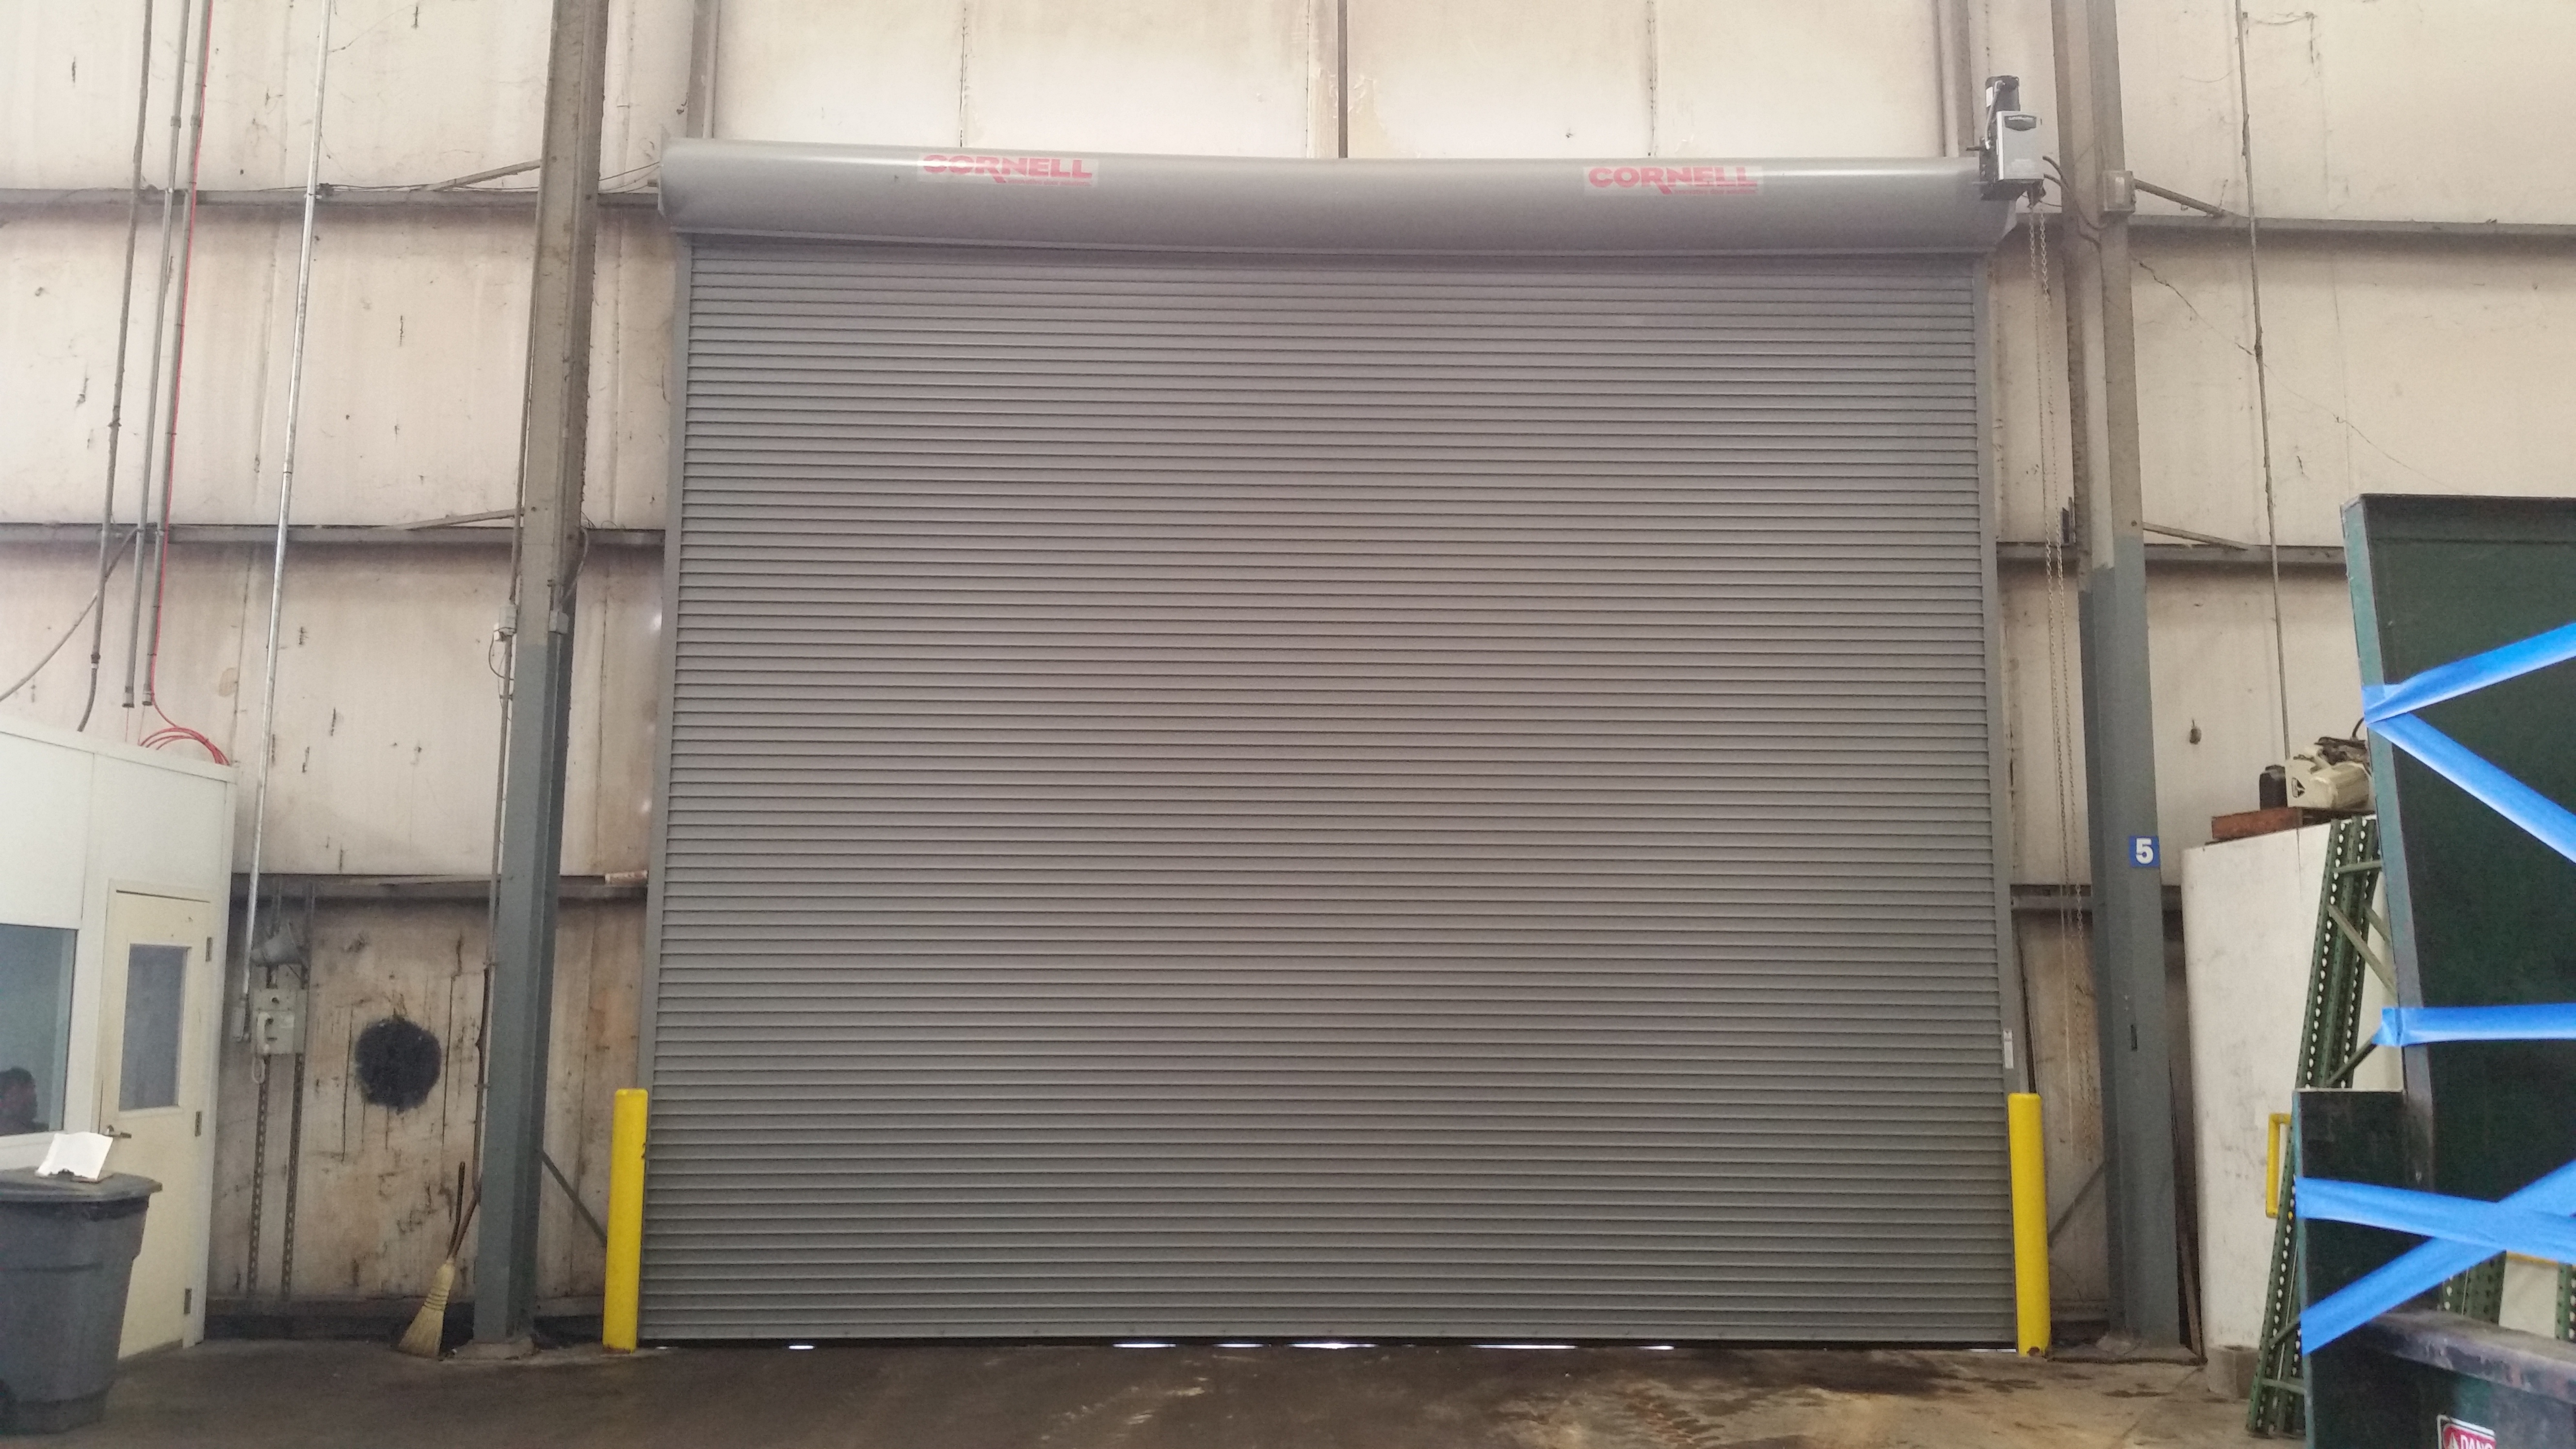 Garage Door Repair Installation Openers And Sales In Brandon Ms for dimensions 5312 X 2988